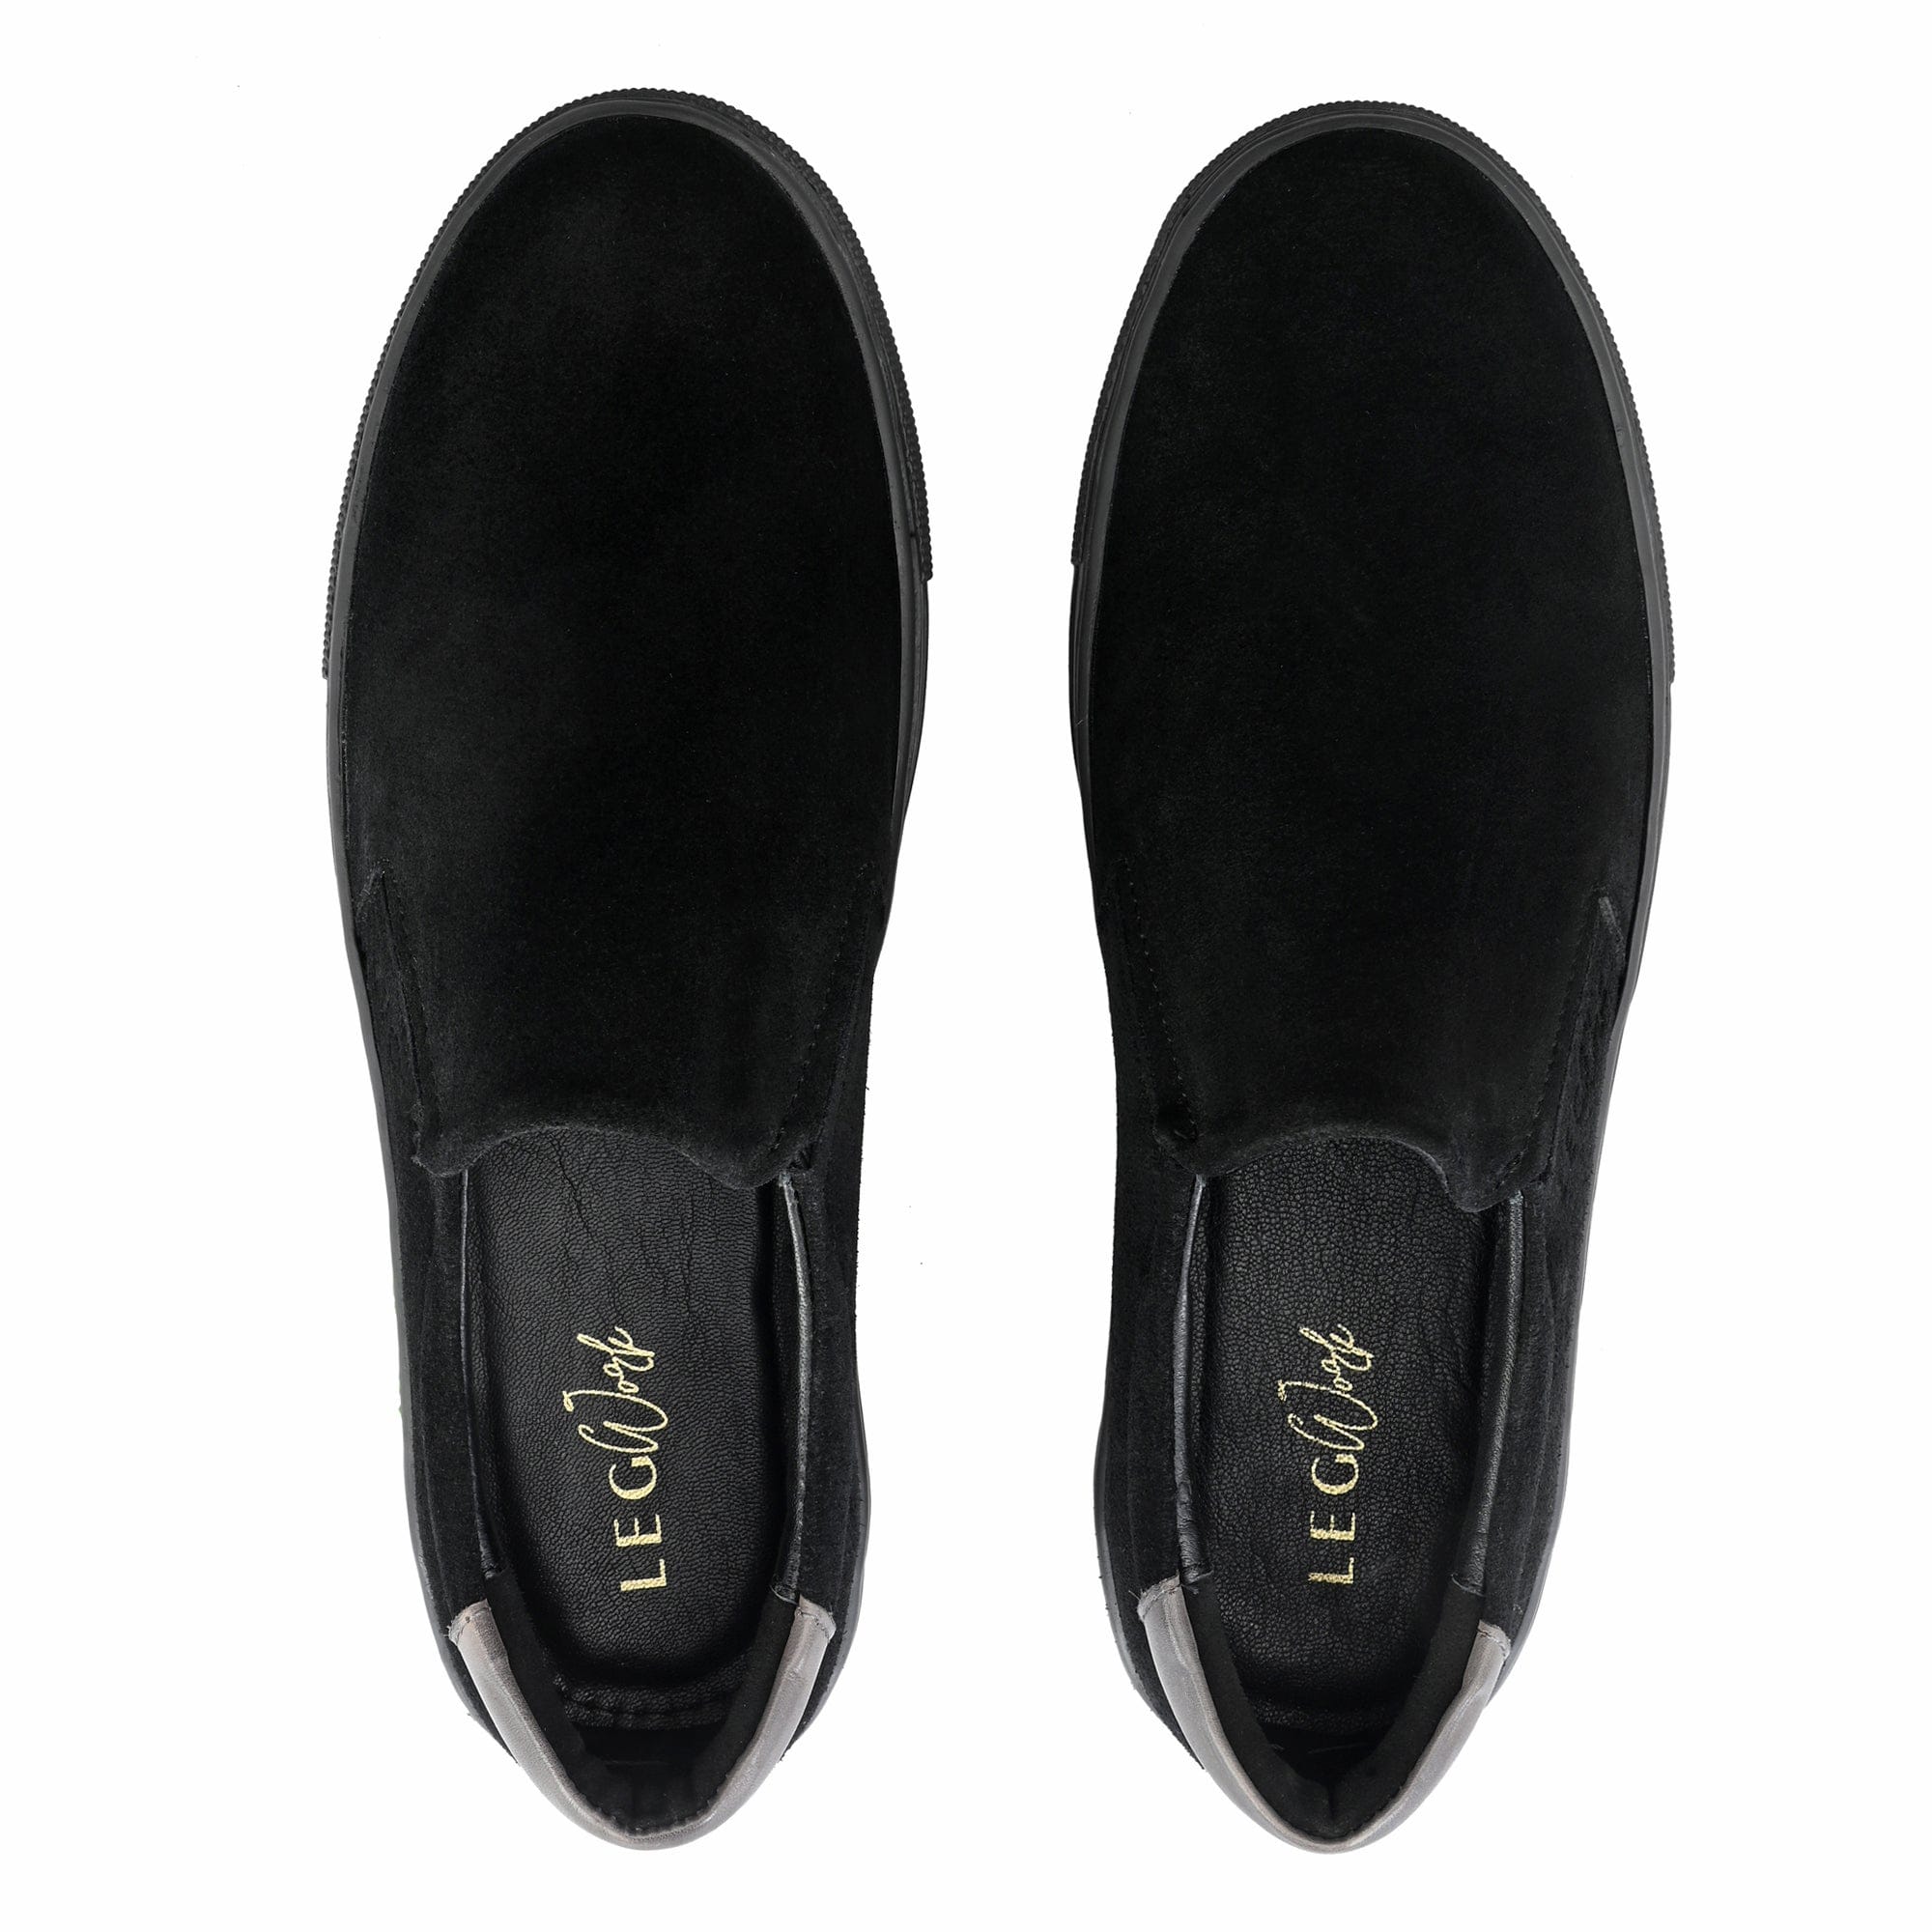 Legwork Slip On Black Italian Suede Leather Shoes